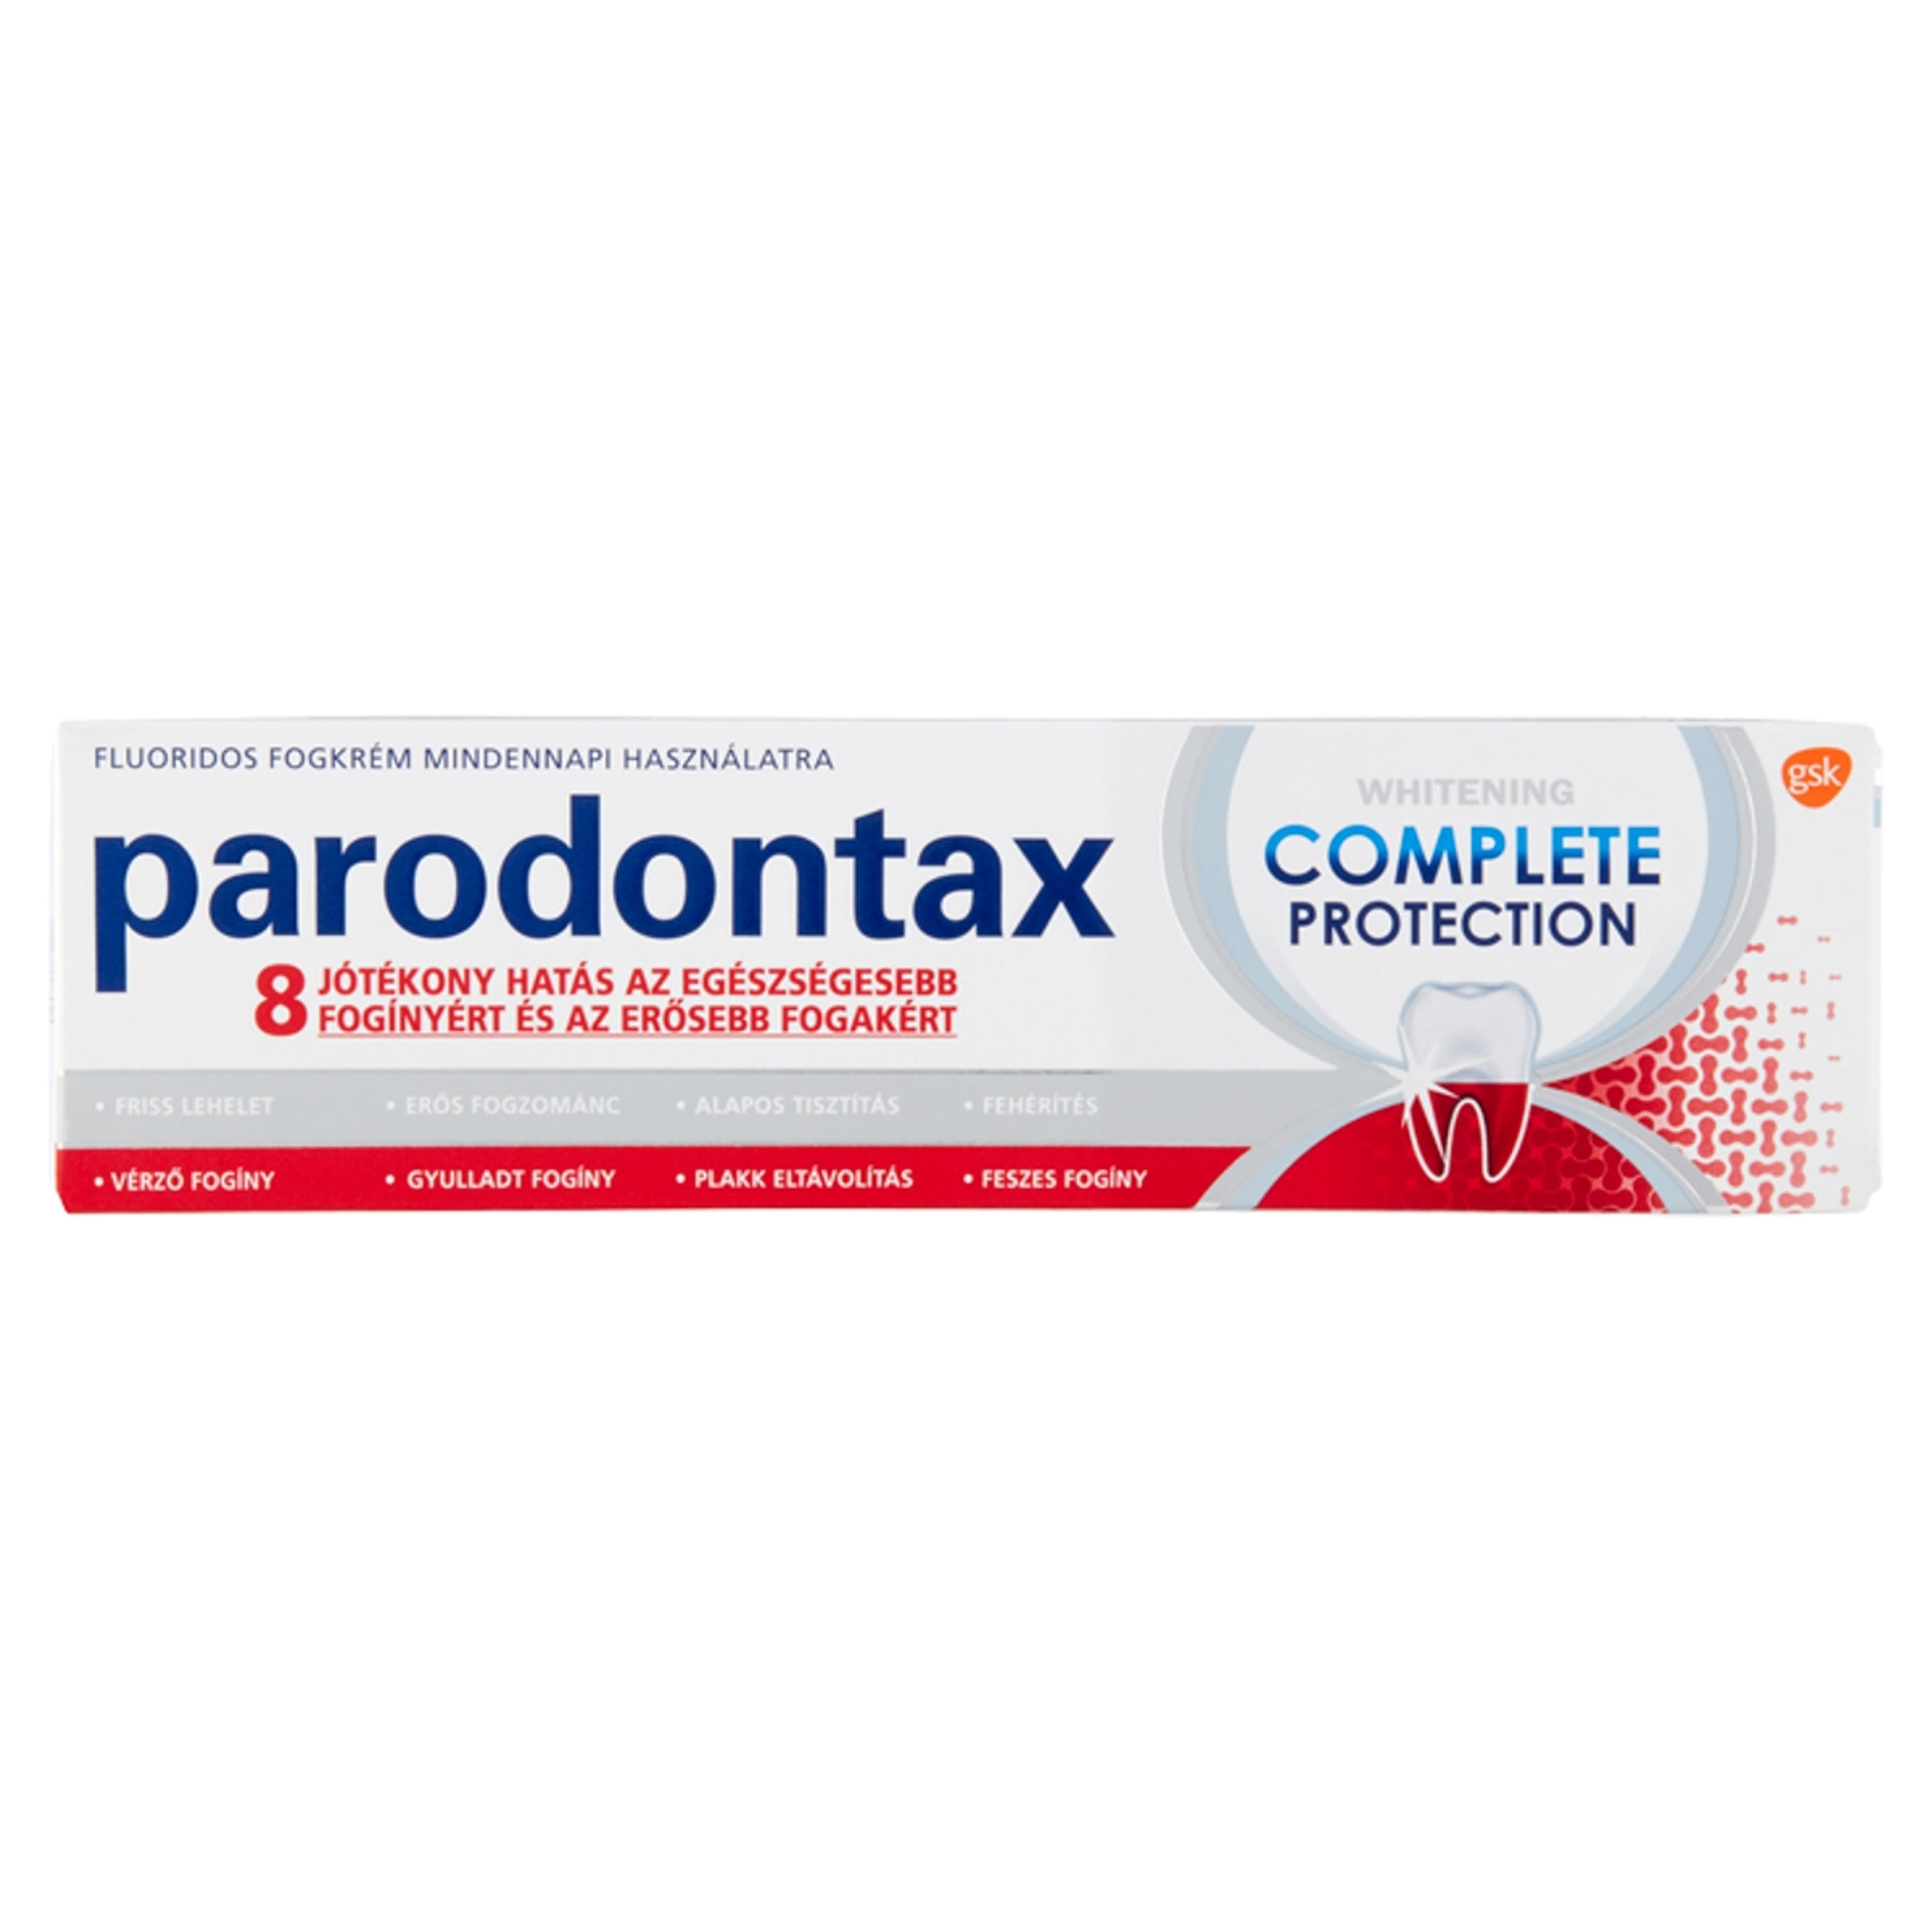 Parodontax Complete Protection Whitening fogkrém - 75 ml